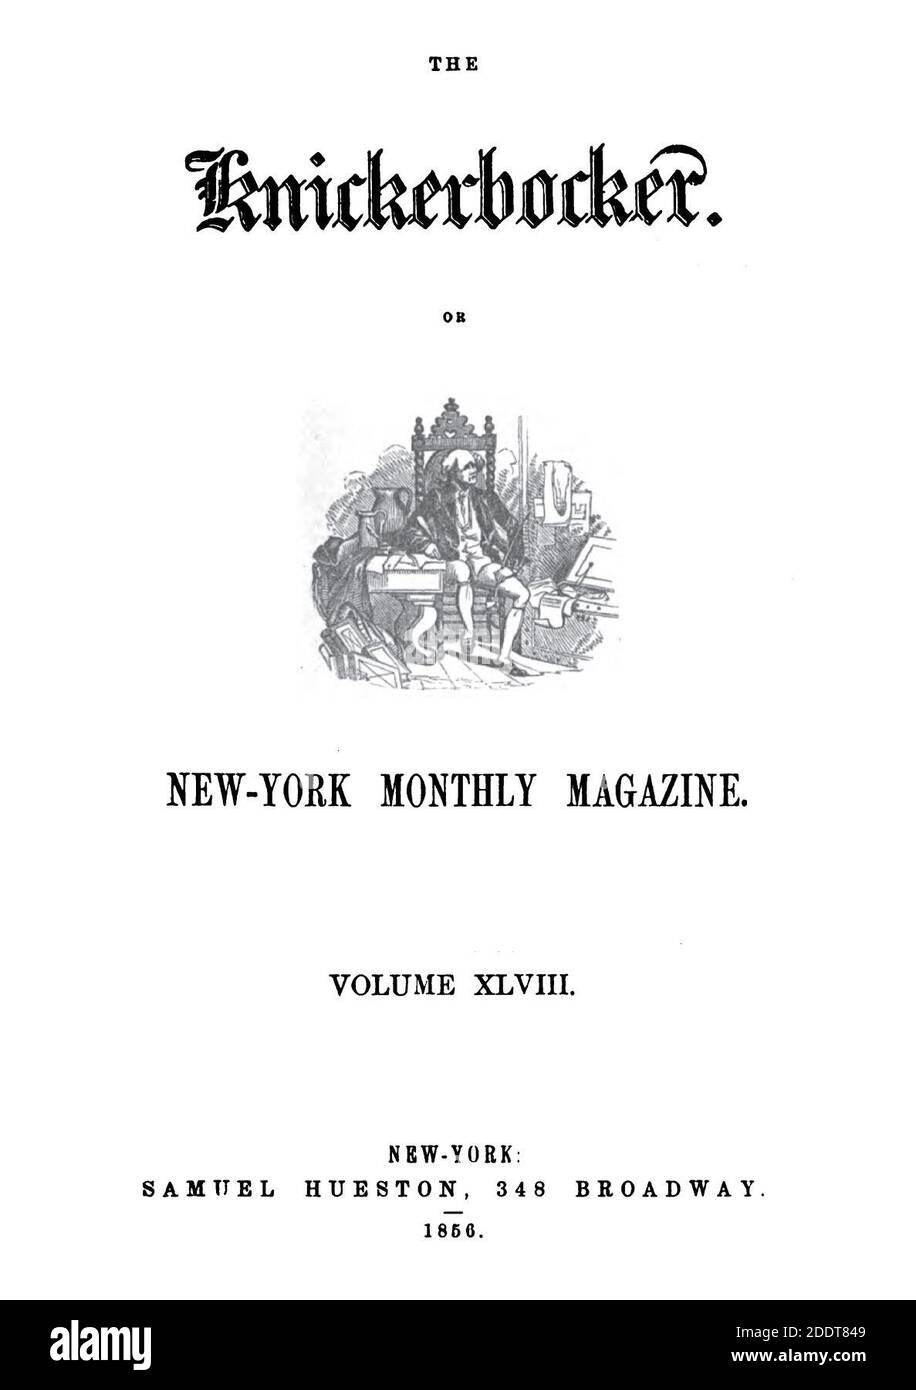 Knickerbocker Magazine Cover 1856. Stock Photo